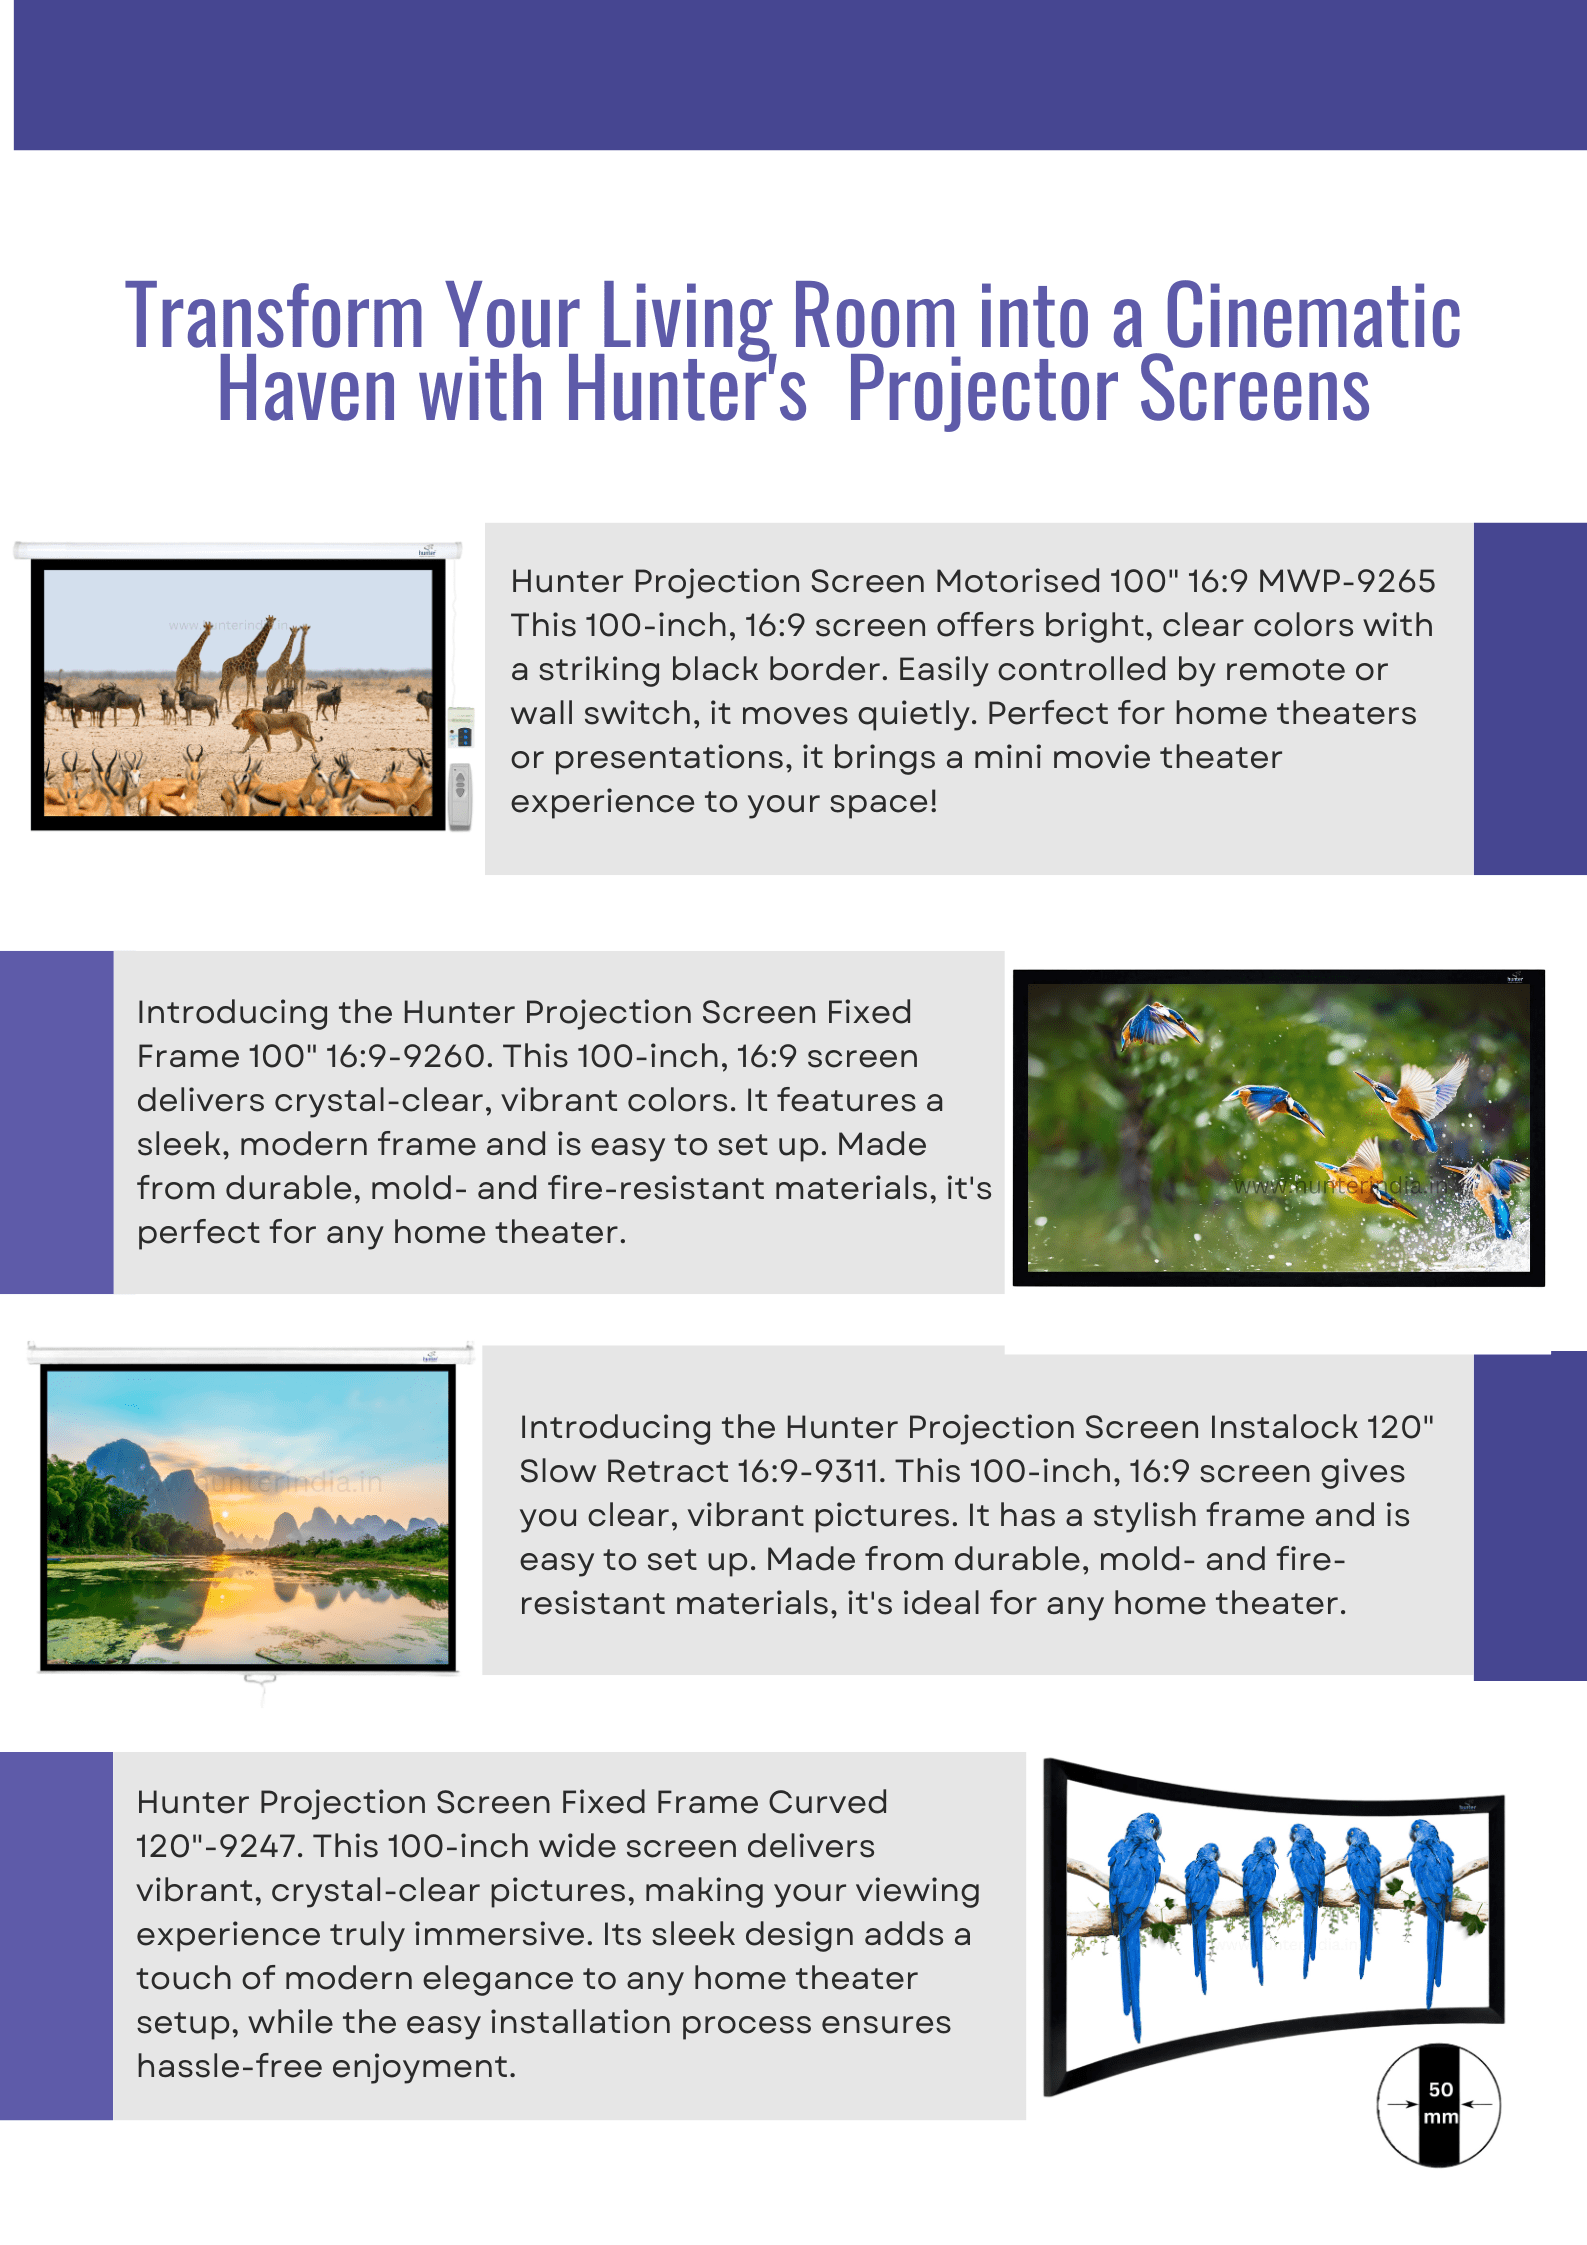 motorised projector screen, fix frame projector screen, instalock projector screen, curve projector screen, projector screen